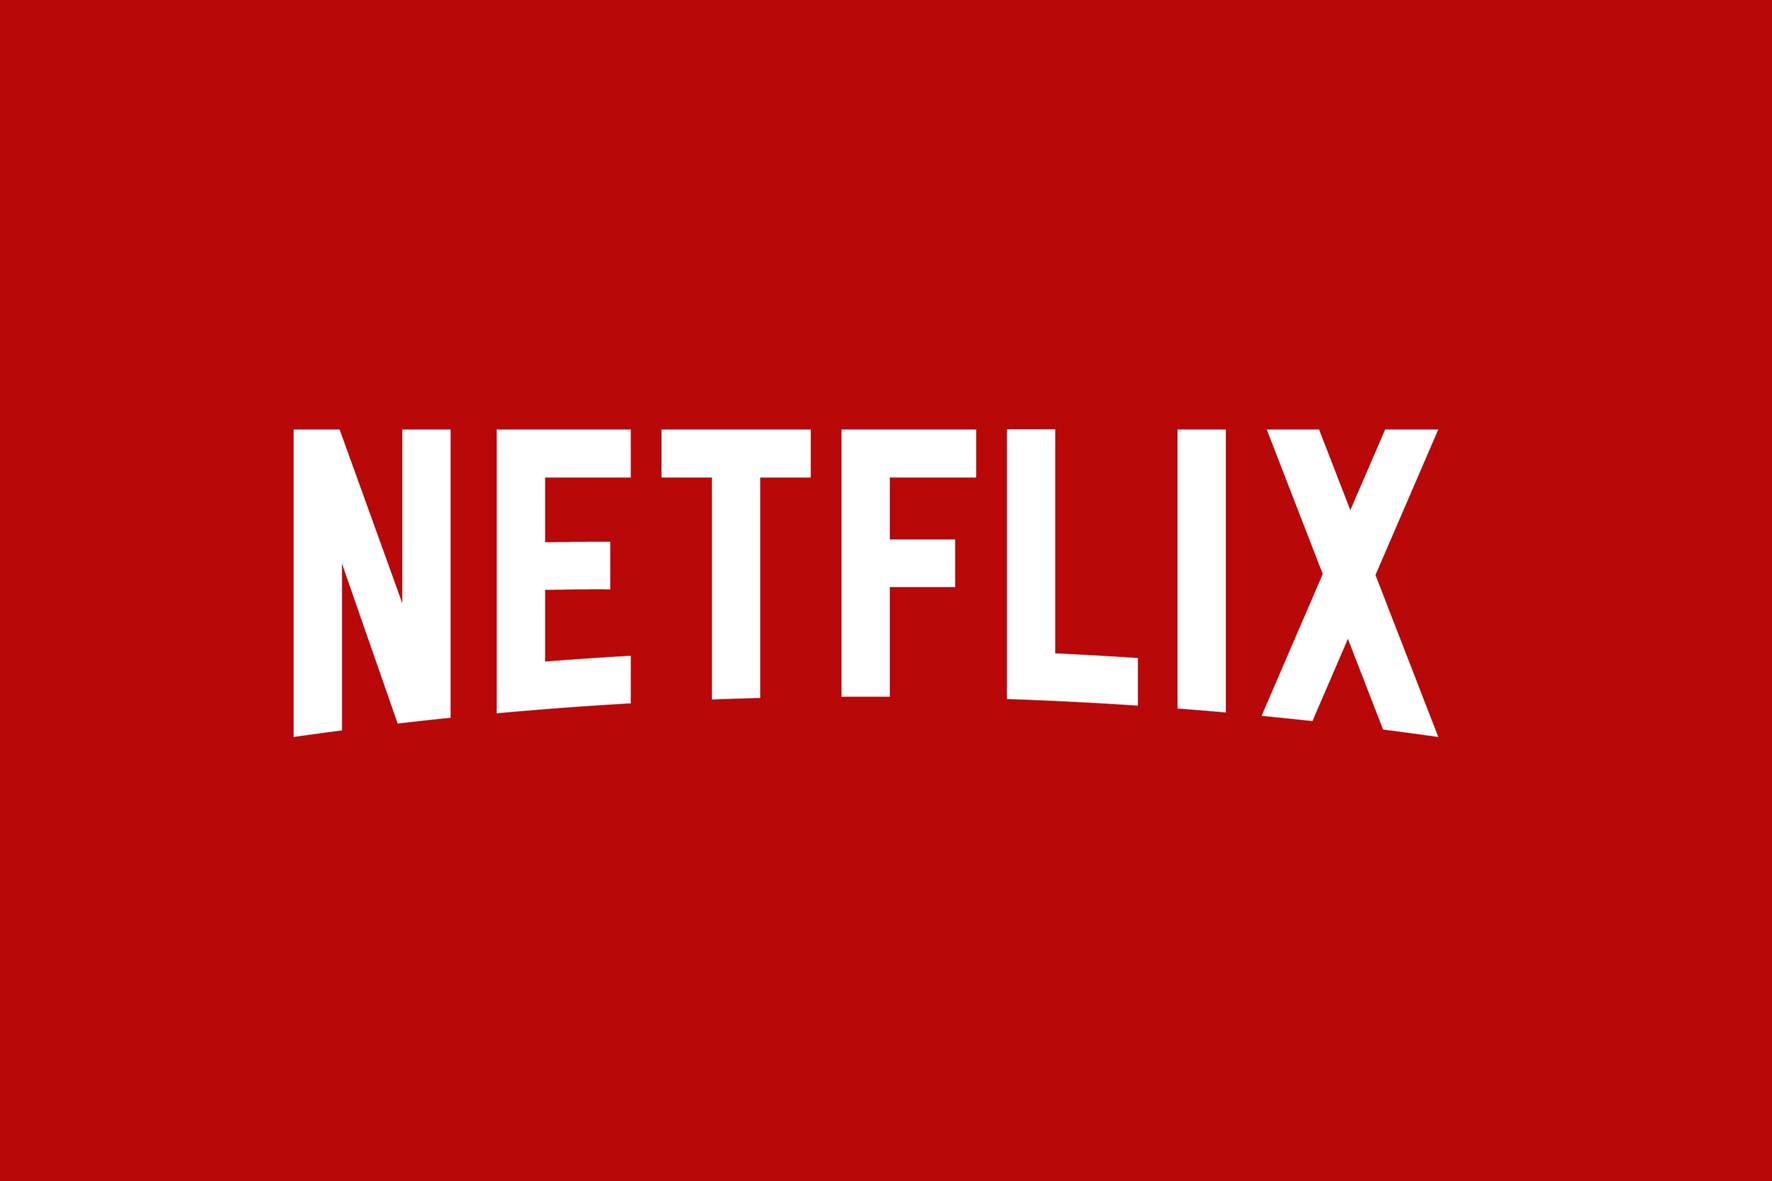 Netflix karantinada 16 milyon abone kazandı